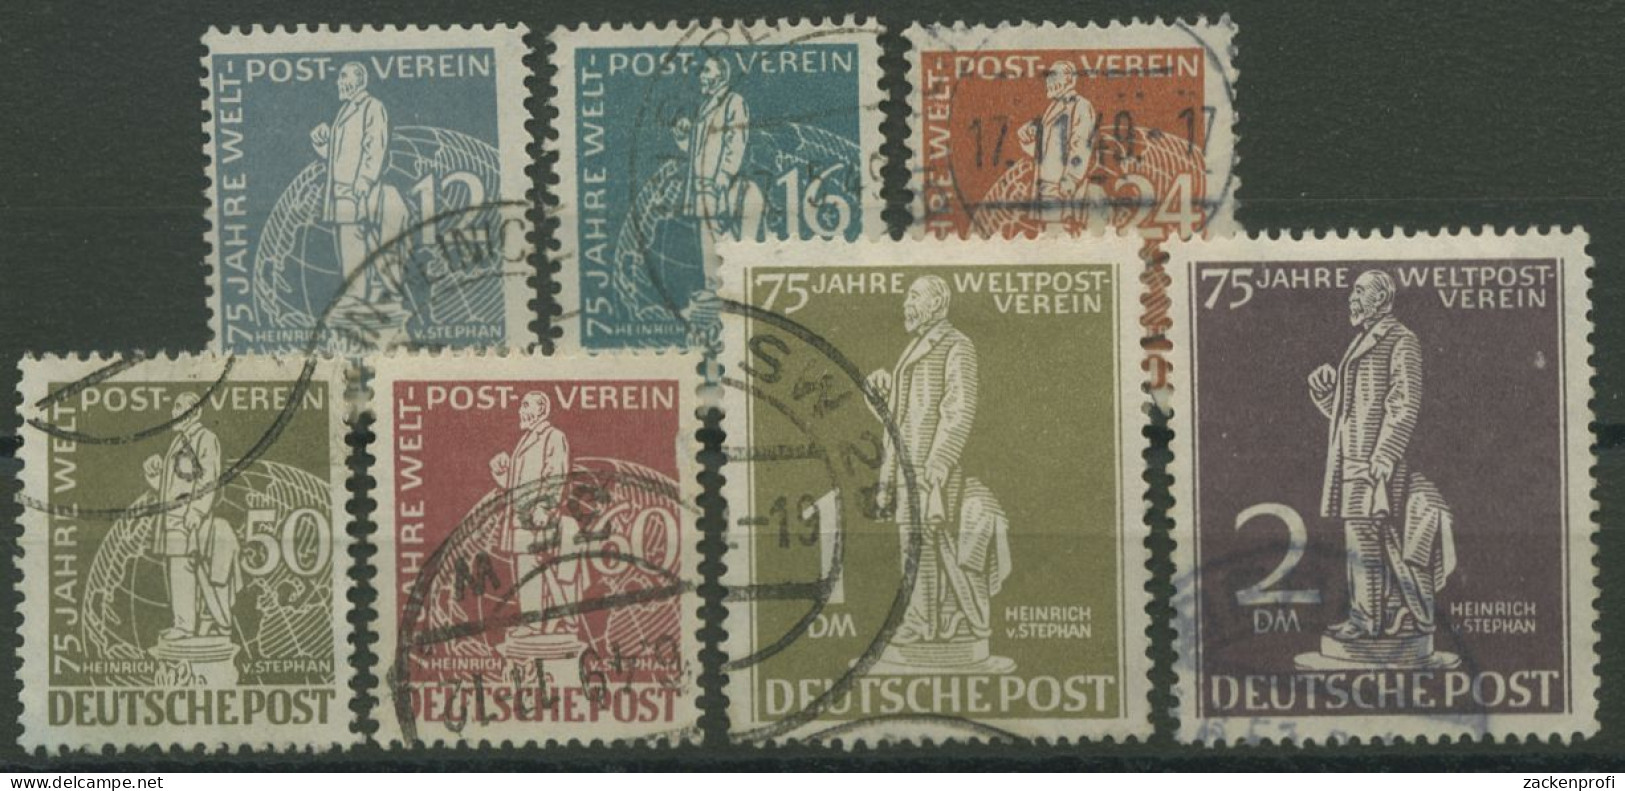 Berlin 1949 H. V. Stephan, Weltpostverein UPU 35/41 Gestempelt (R80797) - Used Stamps